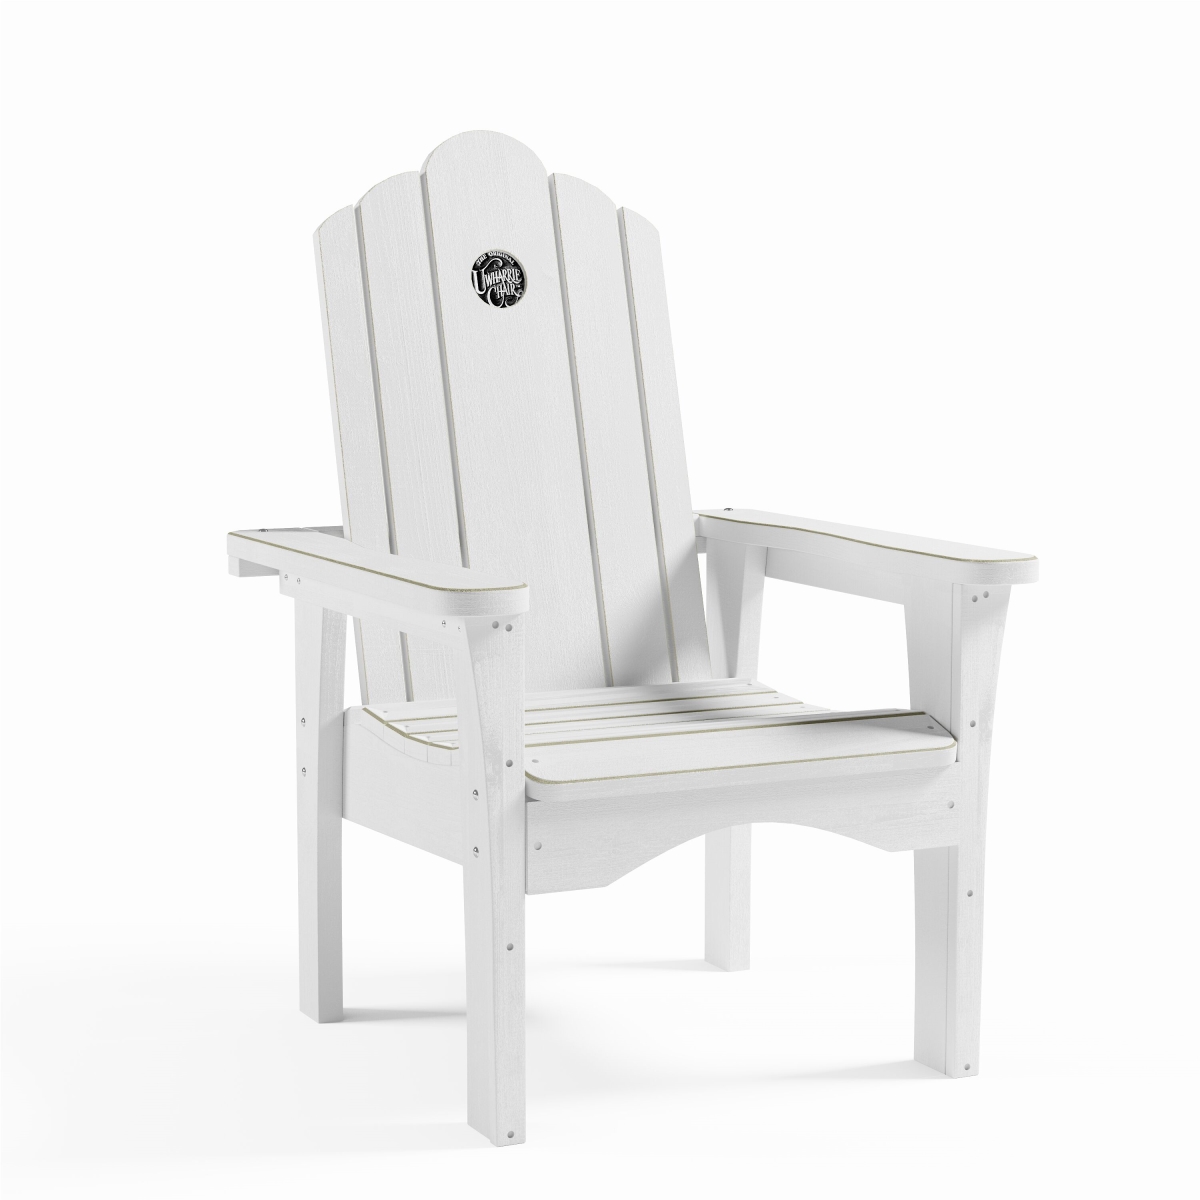 S114-082 Original Wood Lounge Chair, Coffee Pine - 30.5 X 33.5 X 43.5 In.